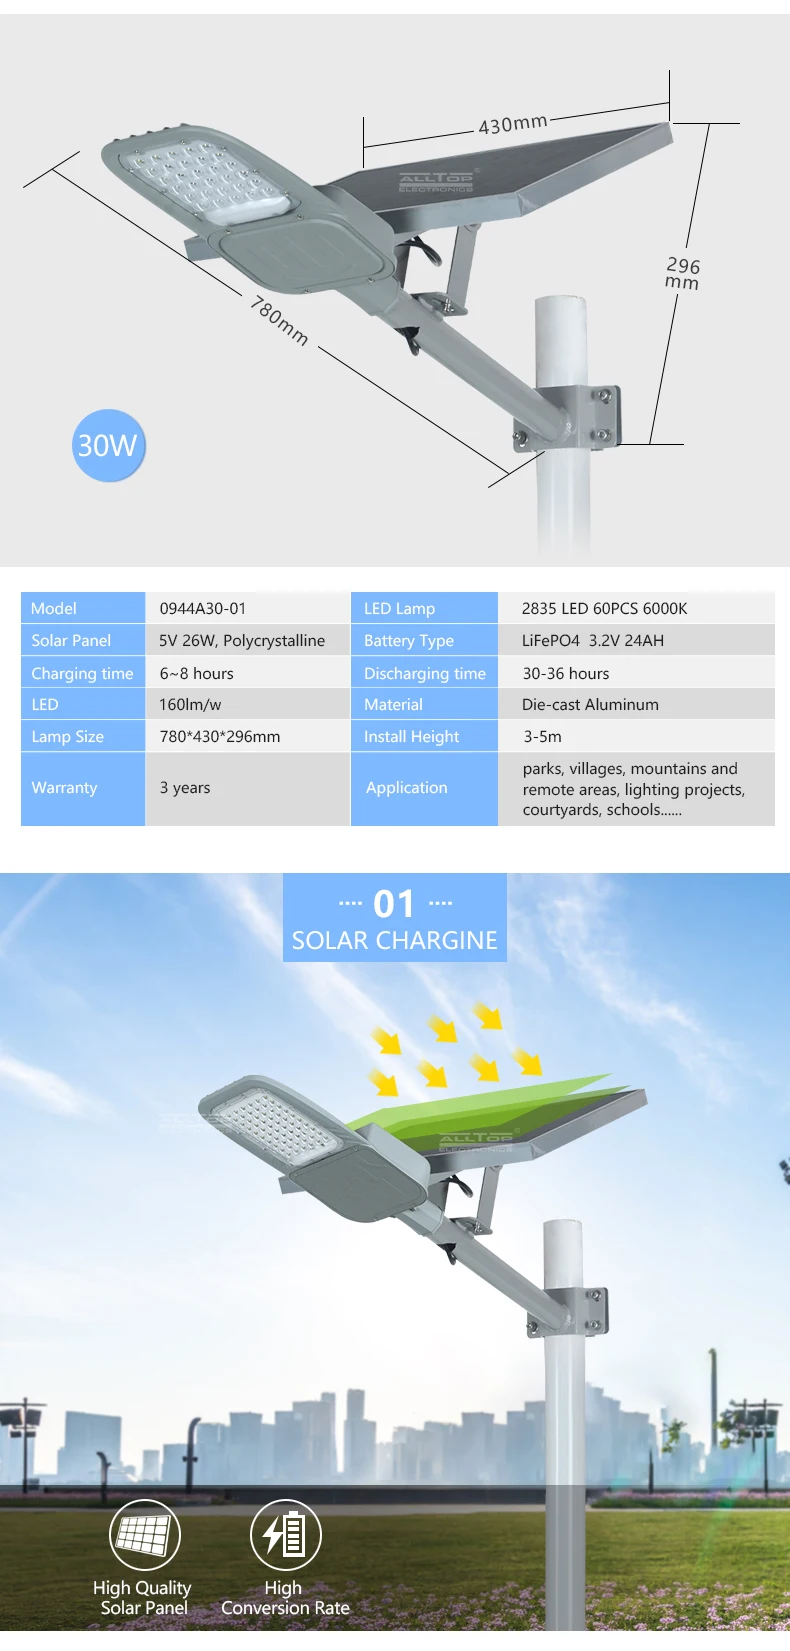 ALLTOP High power remote control outdoor lighting ip65 30w 60w led solar street light